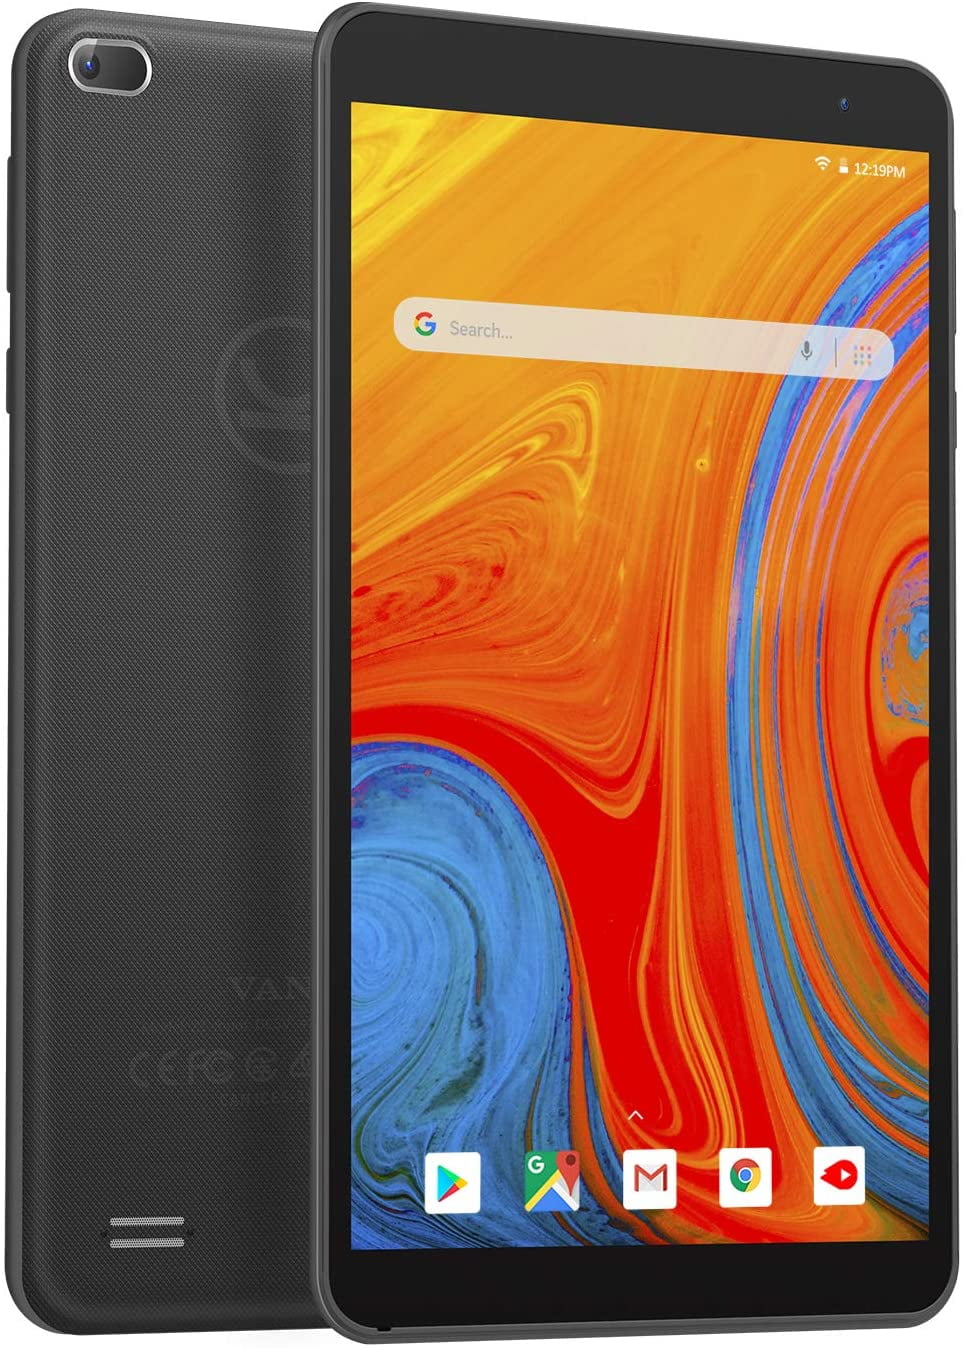 Vankyo MatrixPad Z1 7 inch Tablet Android 8.1 Oreo Go Edition, 32GB  Storage, Quad-Core Processor, IPS HD Display, Wi-Fi, Bluetooth, Black